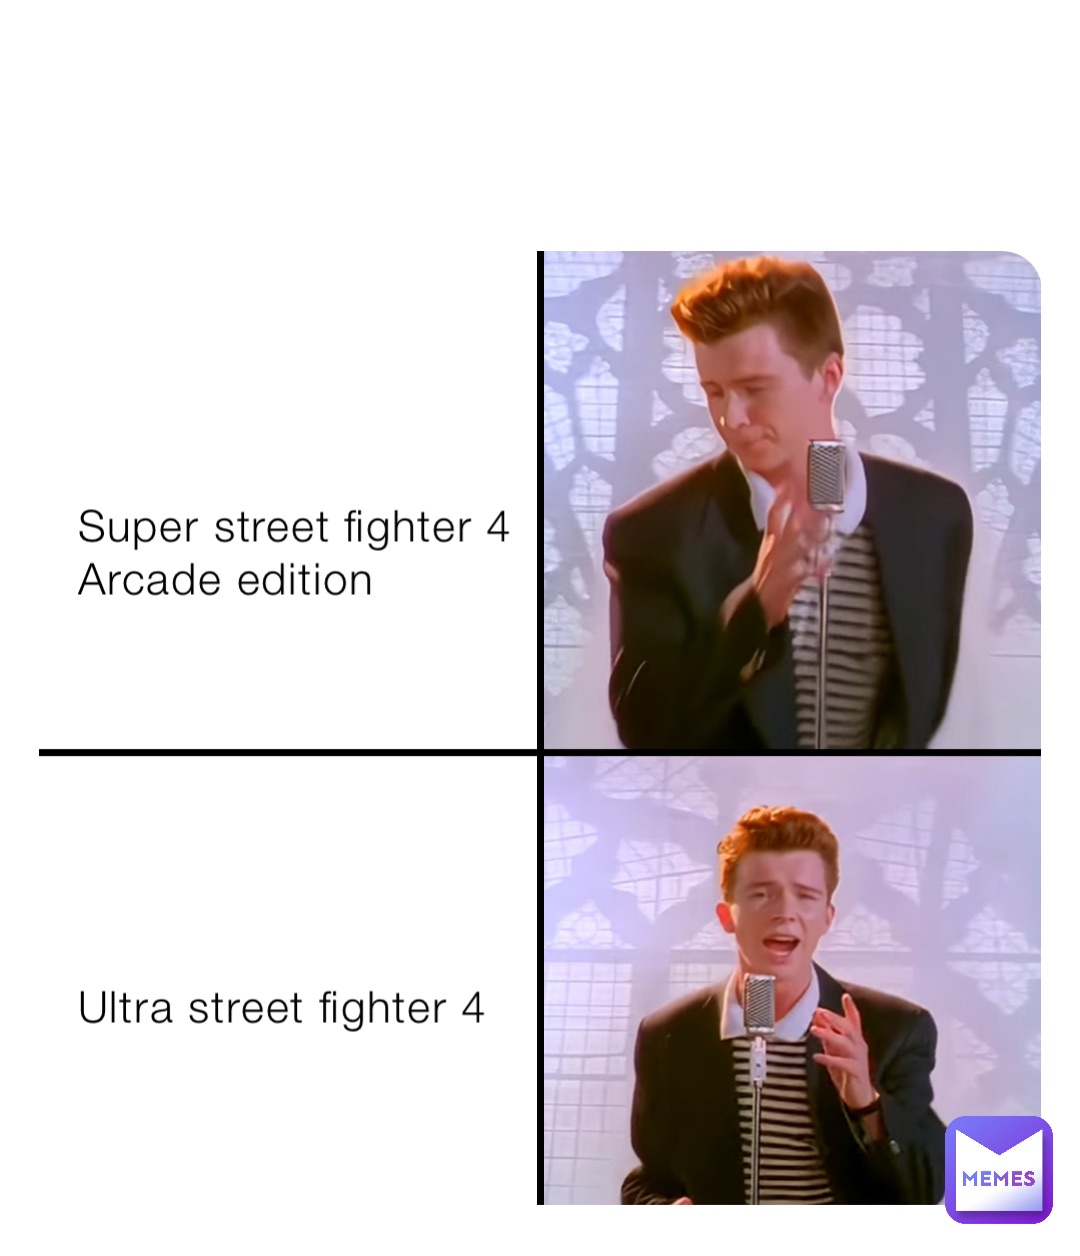 Super street fighter 4
Arcade edition







Ultra street fighter 4